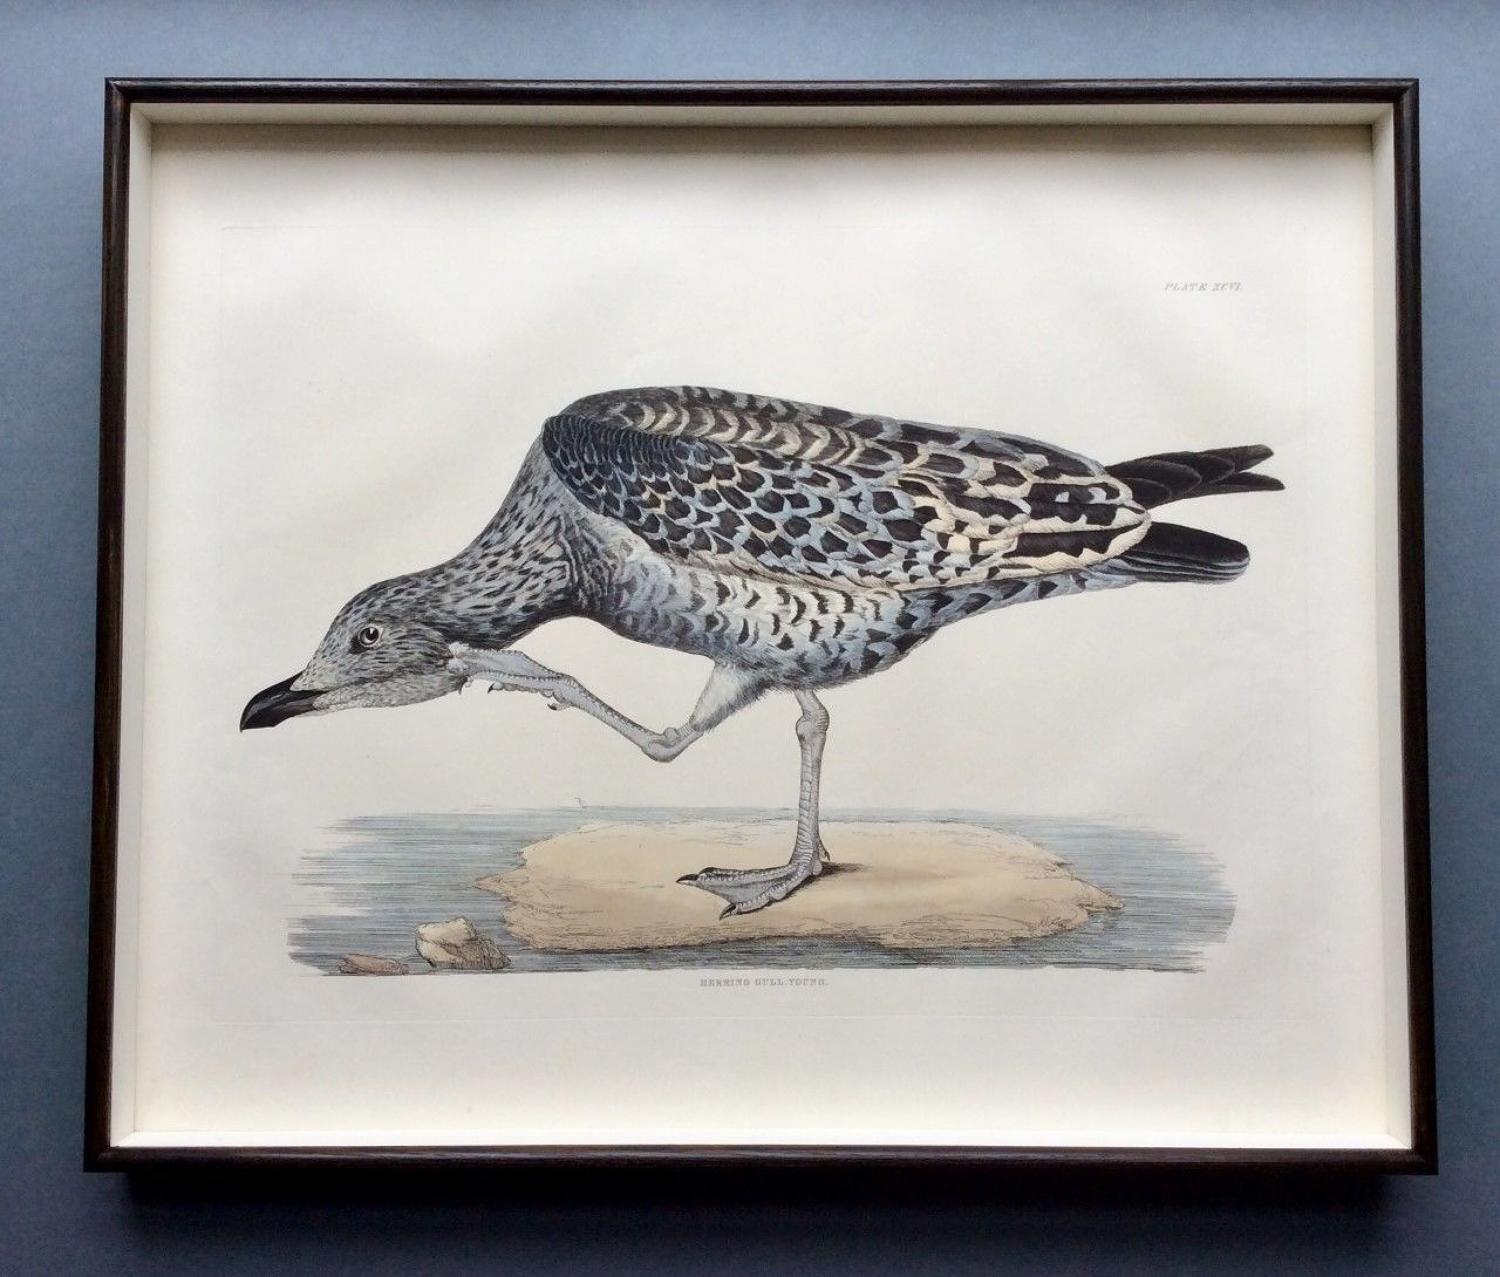 Prideaux John Selby - 19th century engravings of British water birds